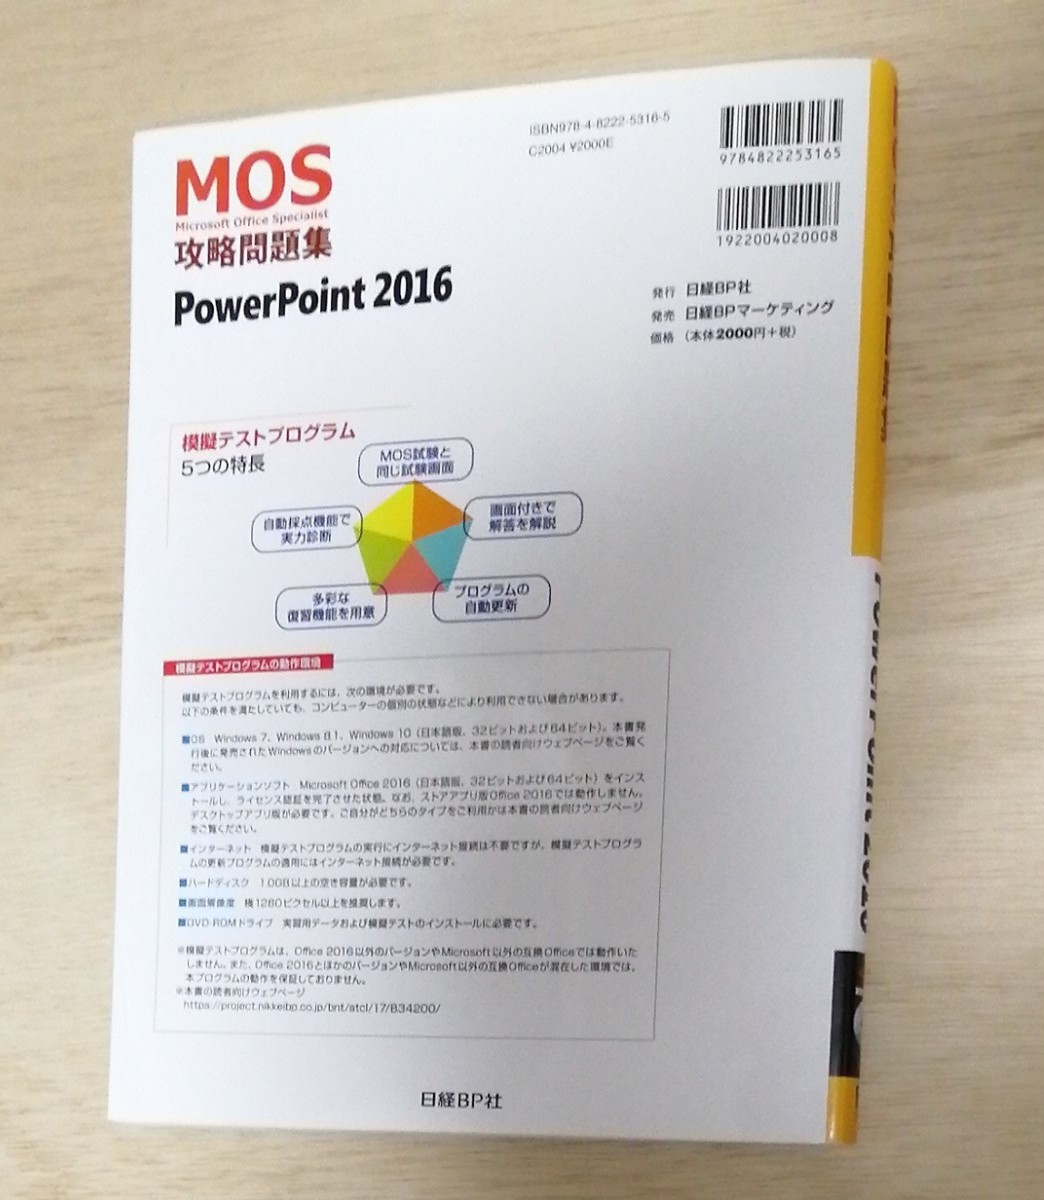 MOS攻略問題集PowerPoint 2016 Microsoft Office Specialist 市川洋子/著｡CD未開封